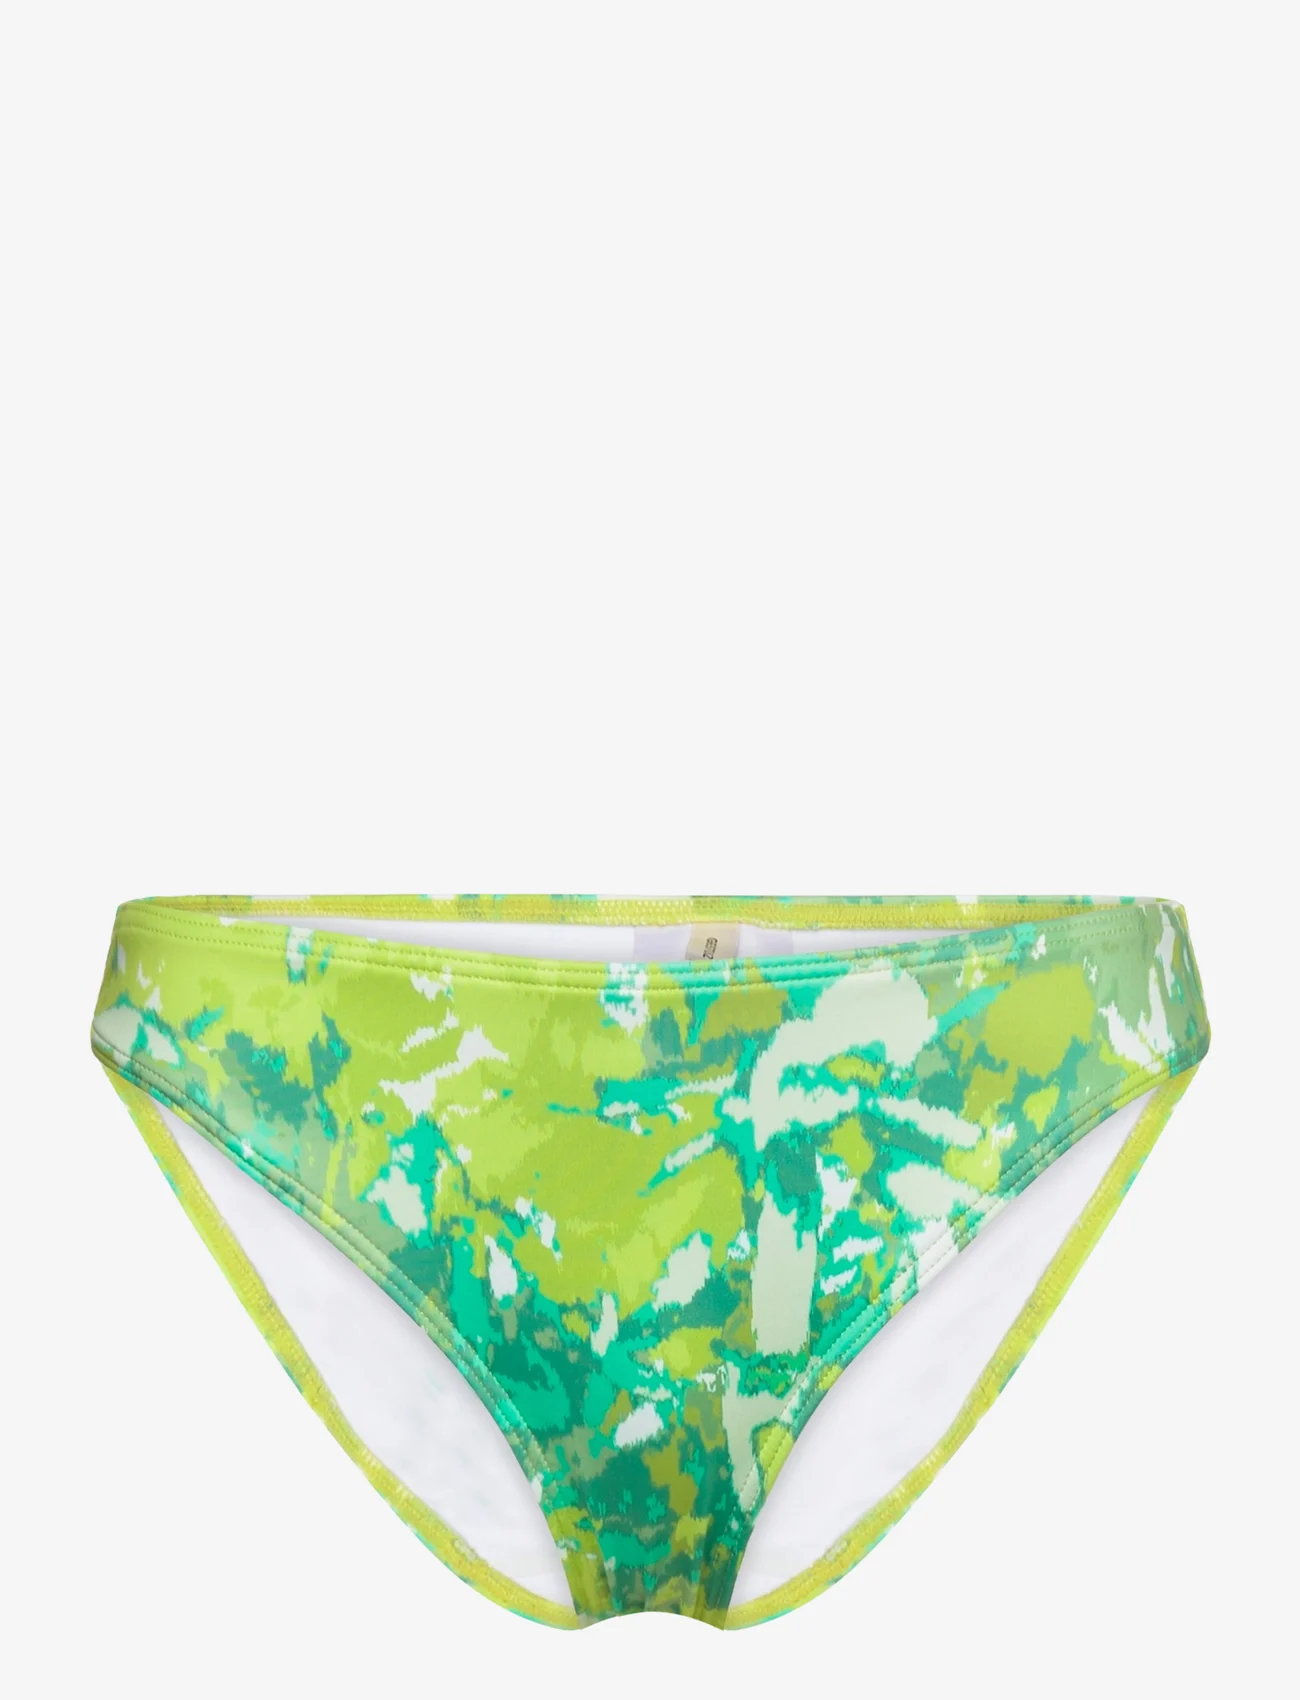 Gestuz - Cana GZ bikini bottom - bikinihousut - green splash - 0